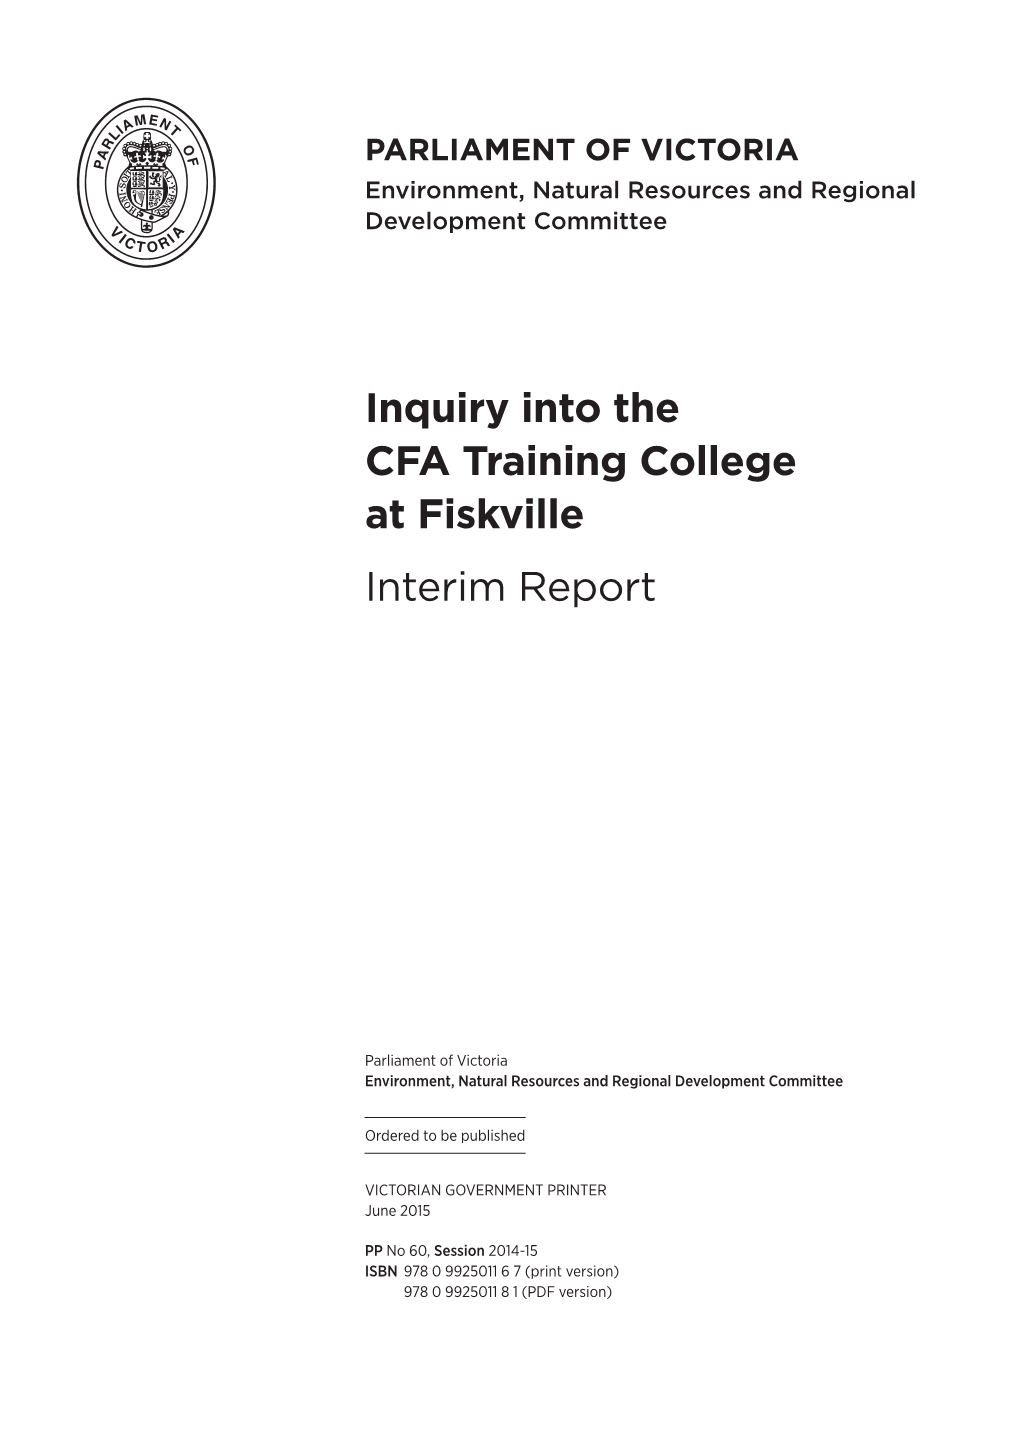 Inquiry Into the CFA Training College at Fiskville Interim Report